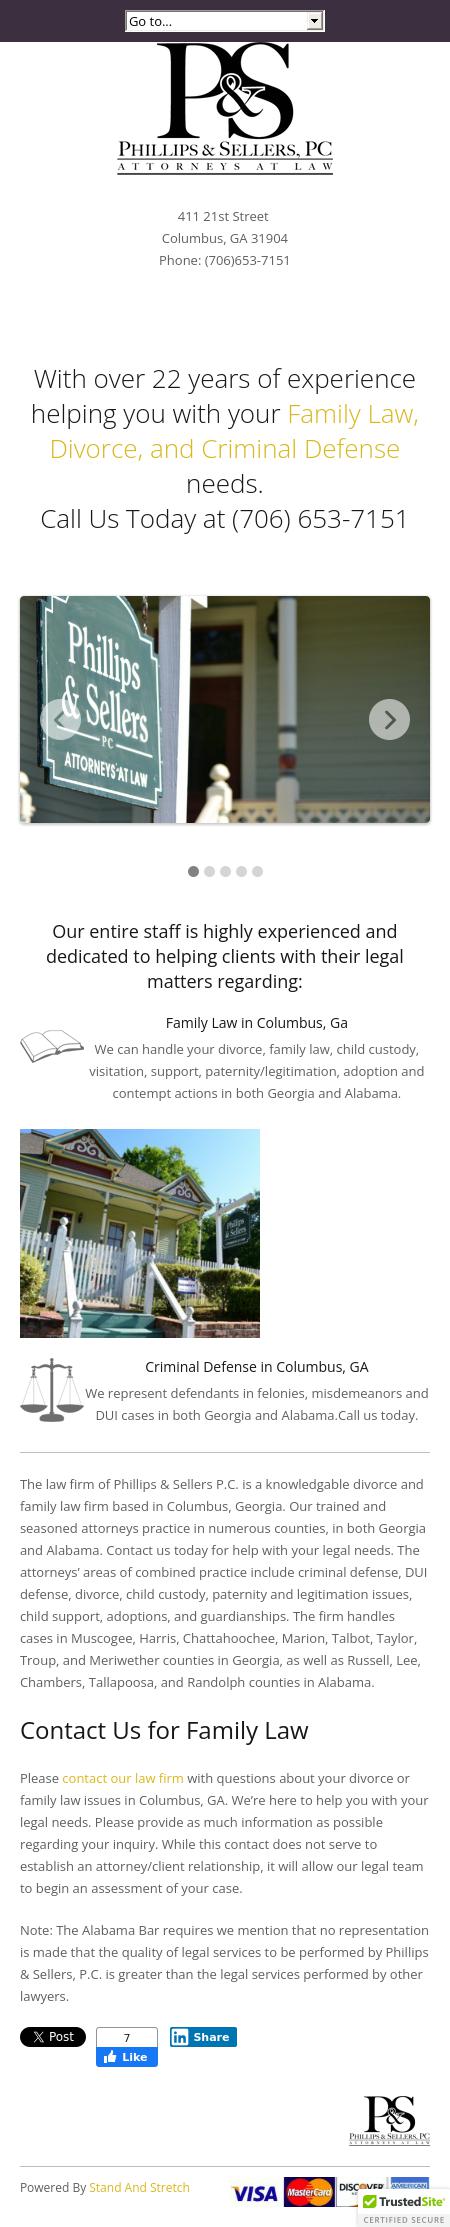 Phillips & Sellers PC - Columbus GA Lawyers